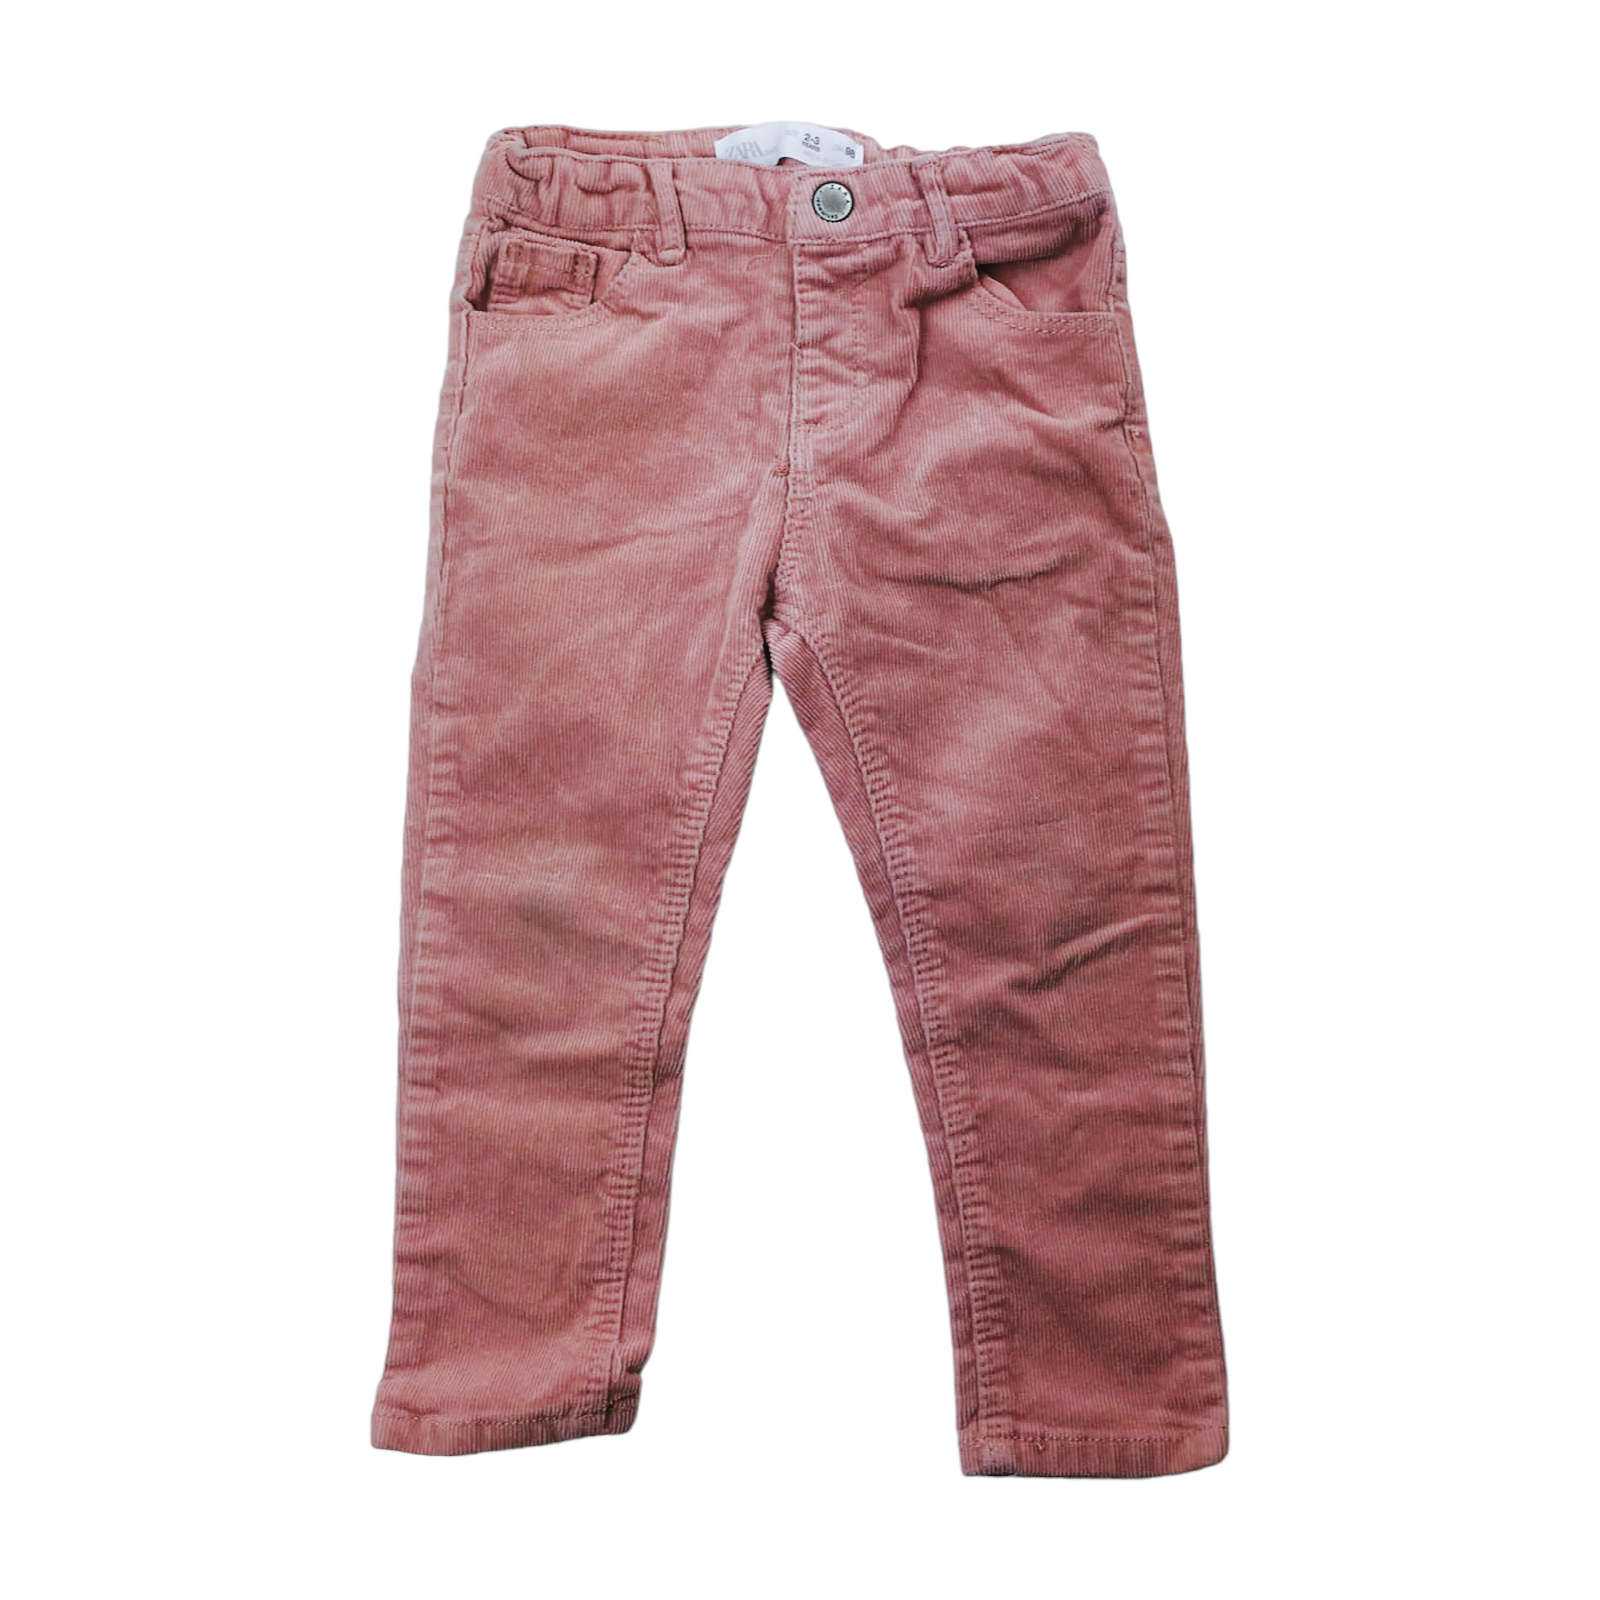 Pantalon Zara de cotele rosado Talla 2-3 años